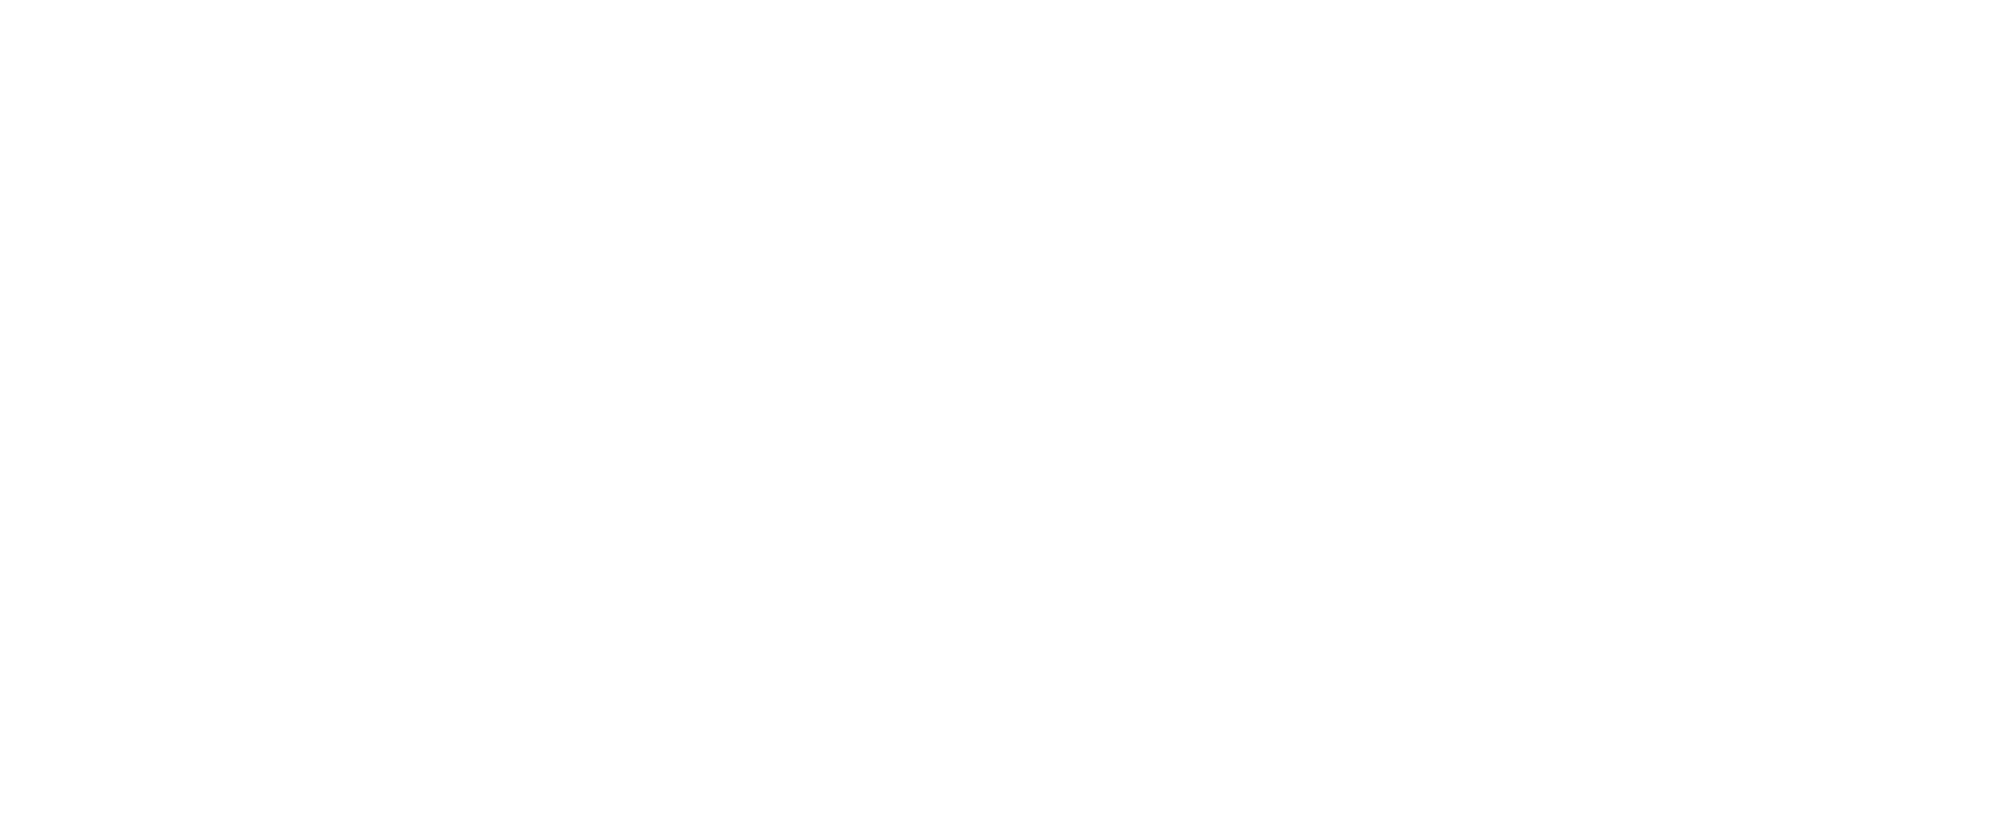 logo catch-up - bistro